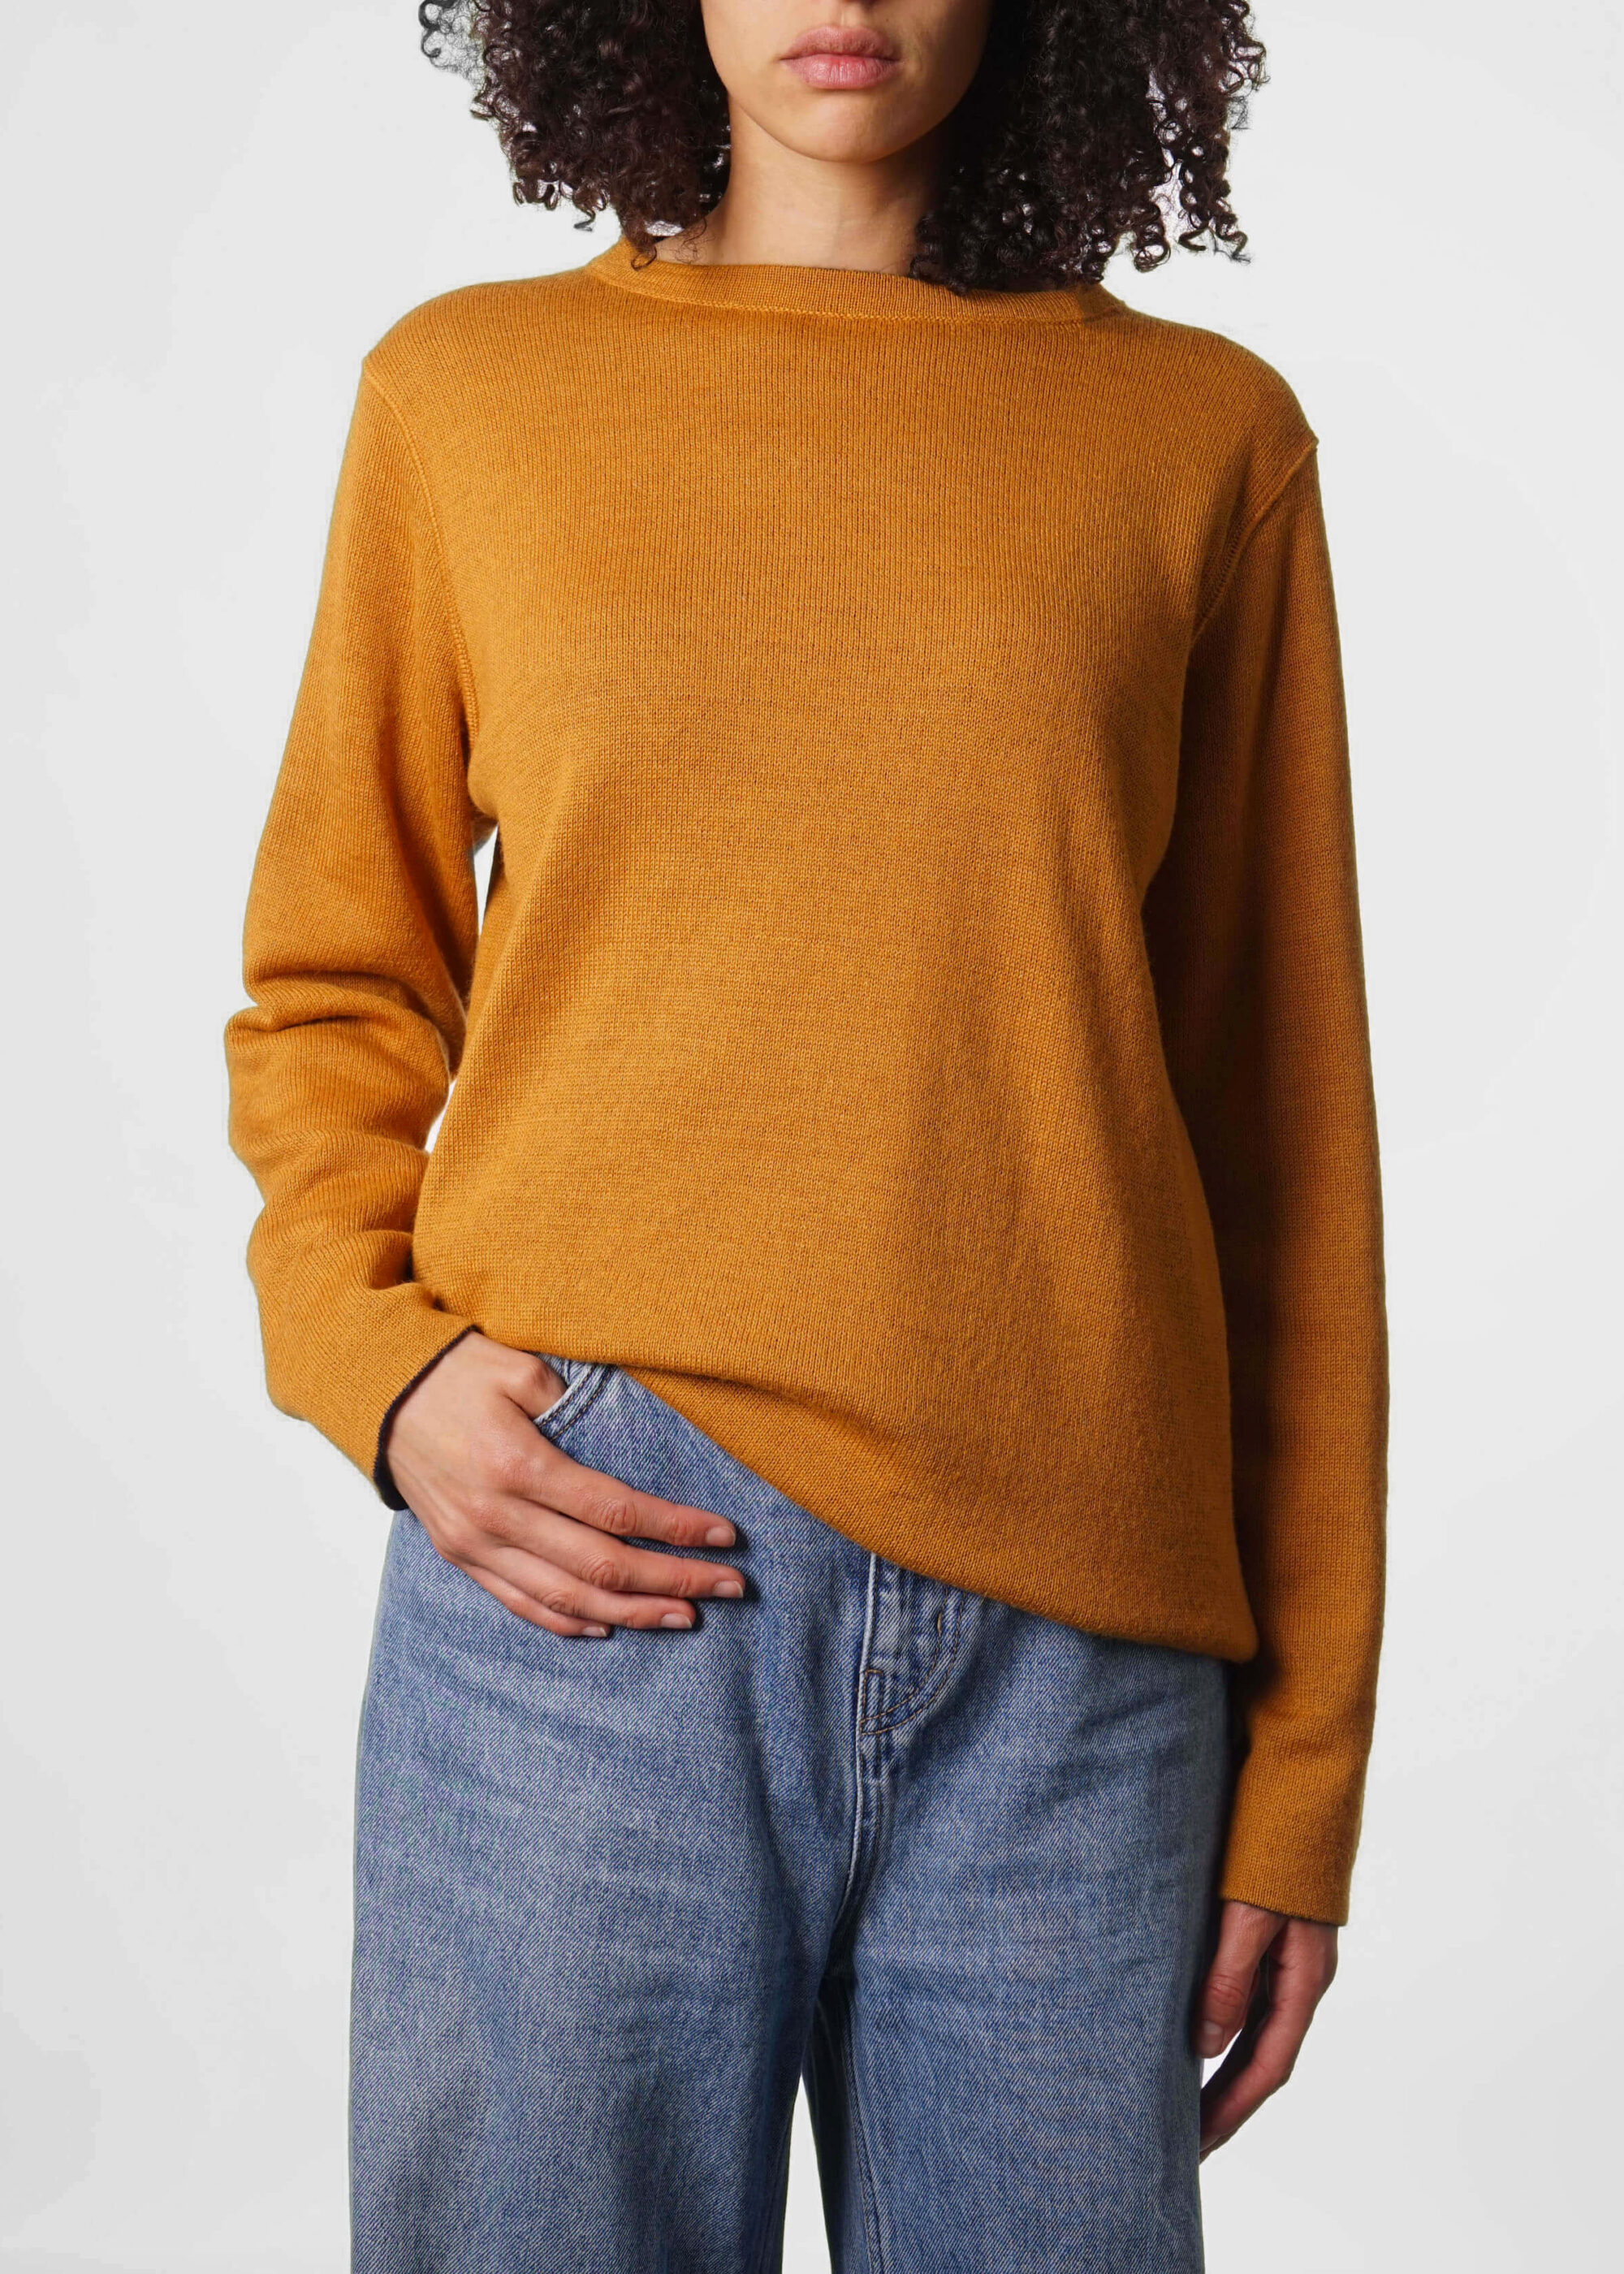 Product image for »Blauaras Ochre« Reversible Baby Alpaca Sweater